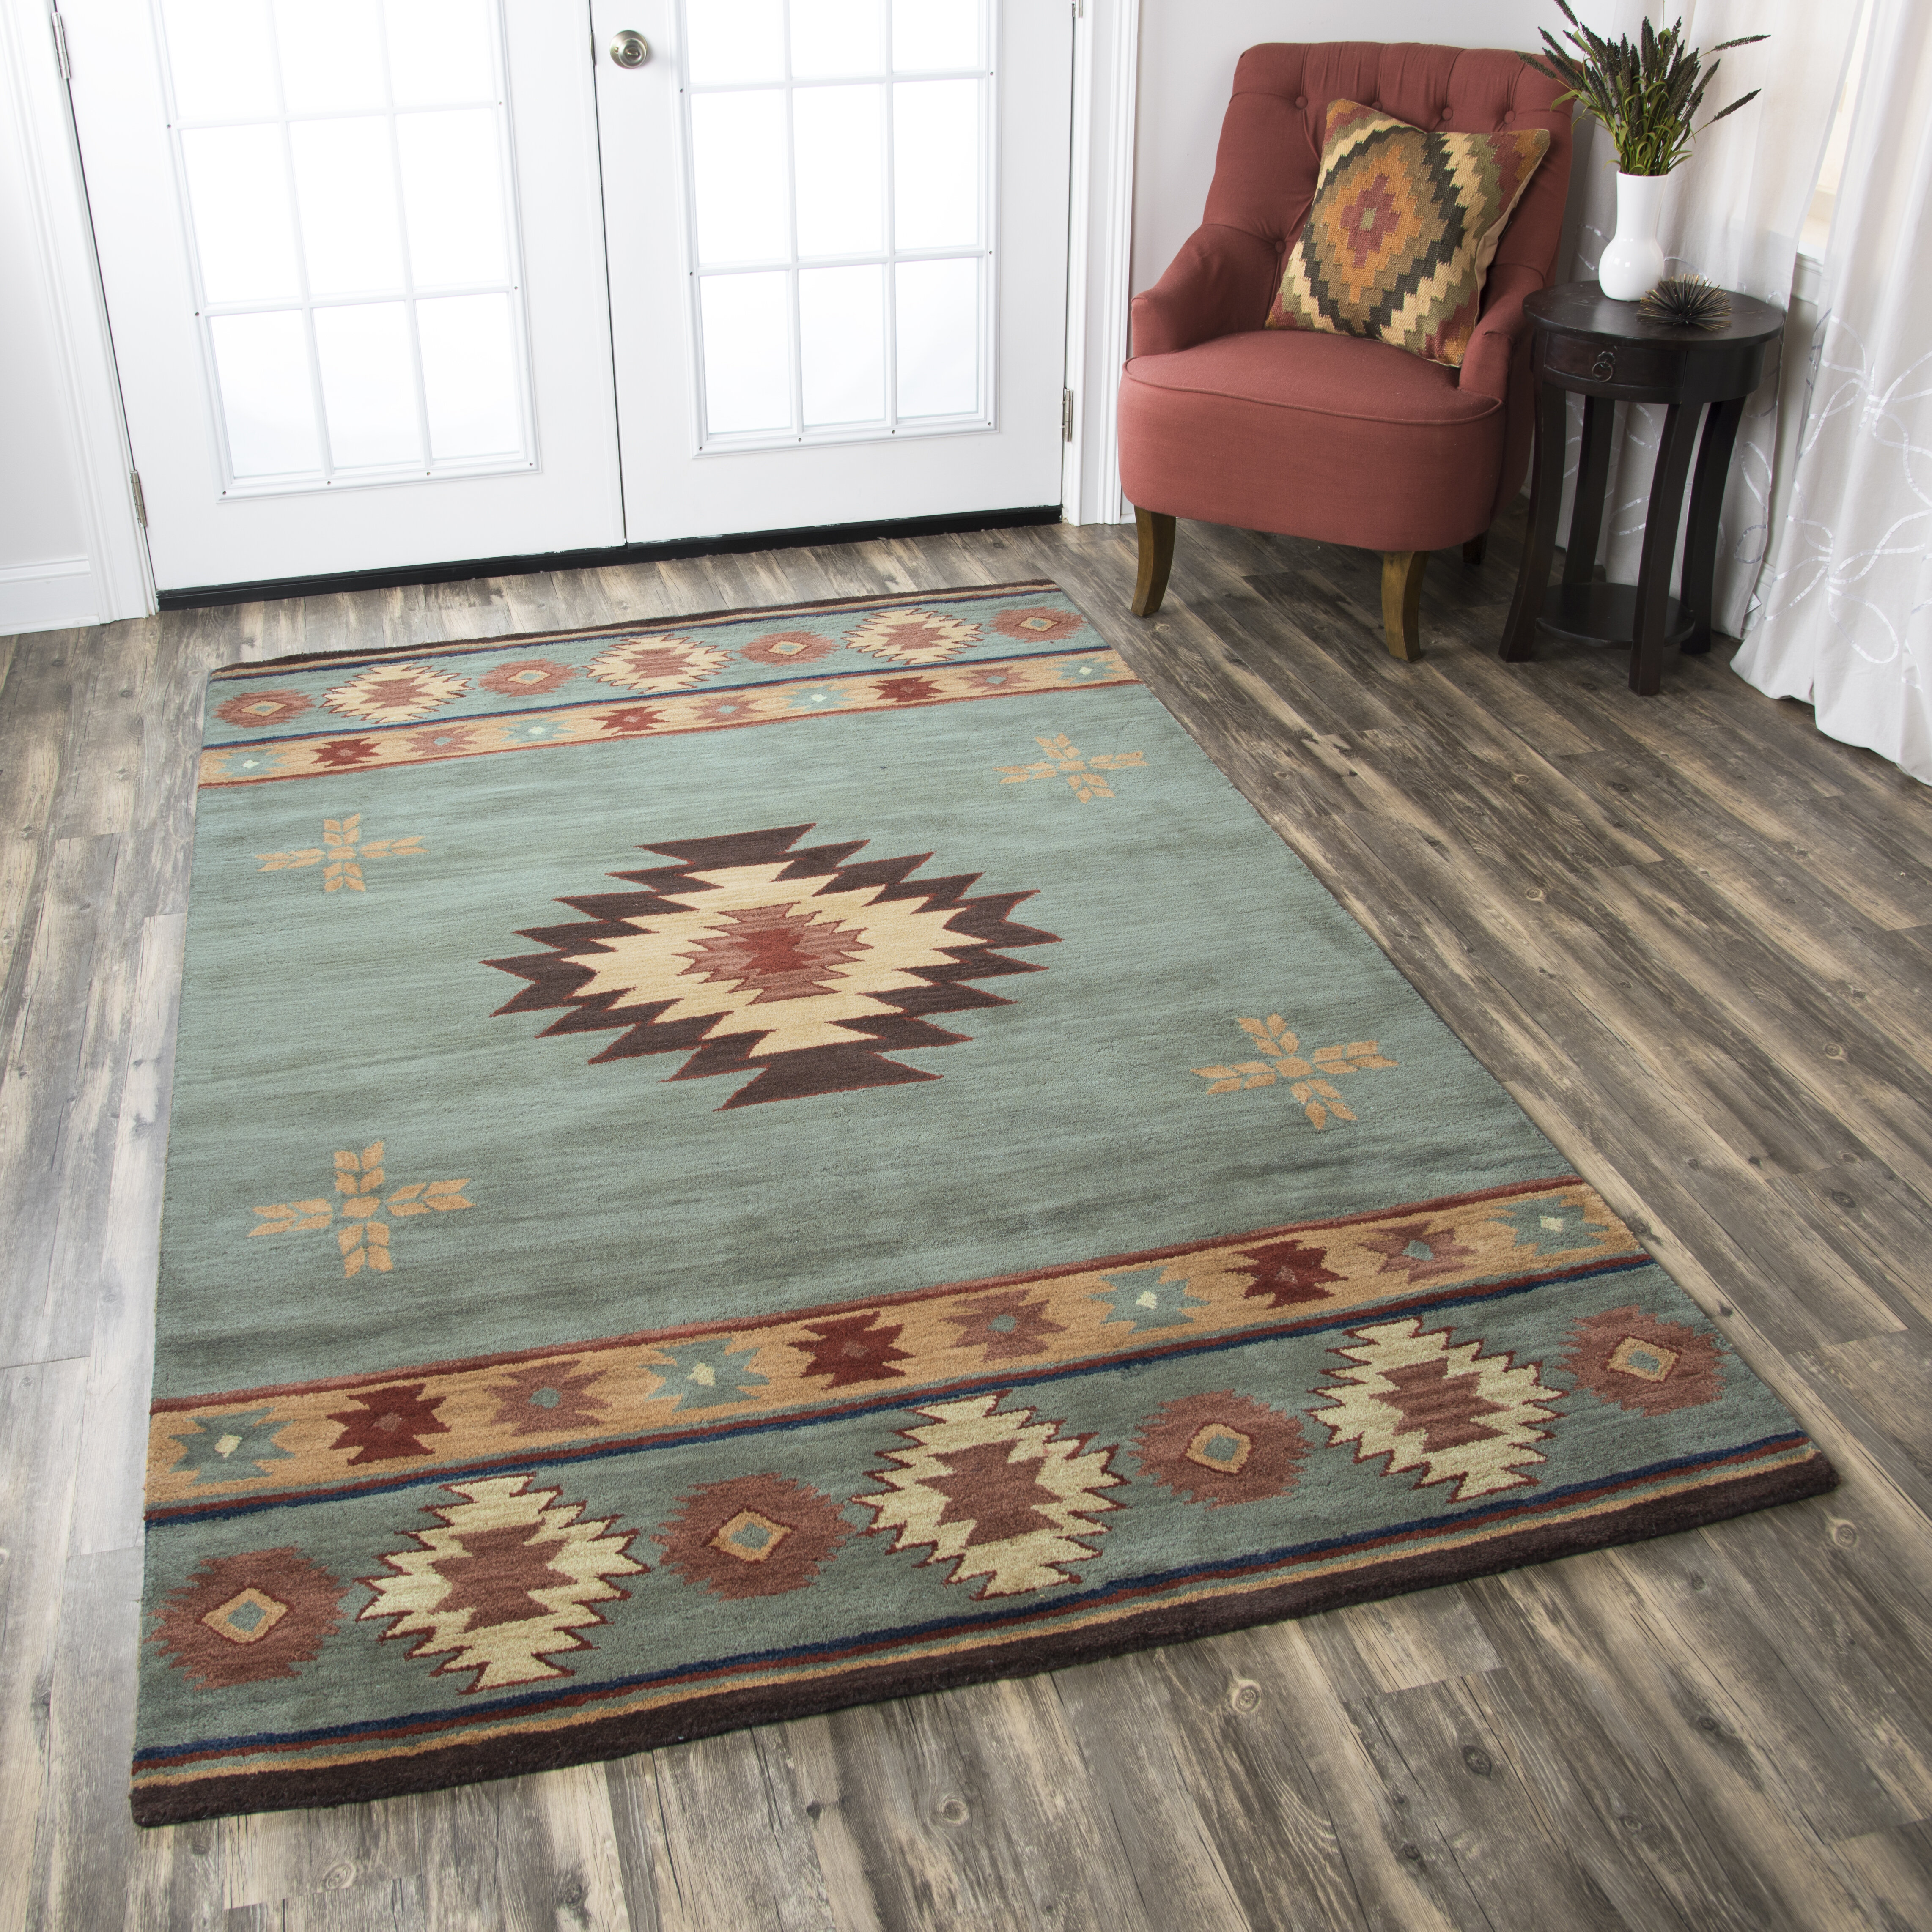 The Big Lebowski Doormat Carpet Mat Rug Polyester Non-Slip Floor Decor Bath  Bathroom Kitchen Bedroom